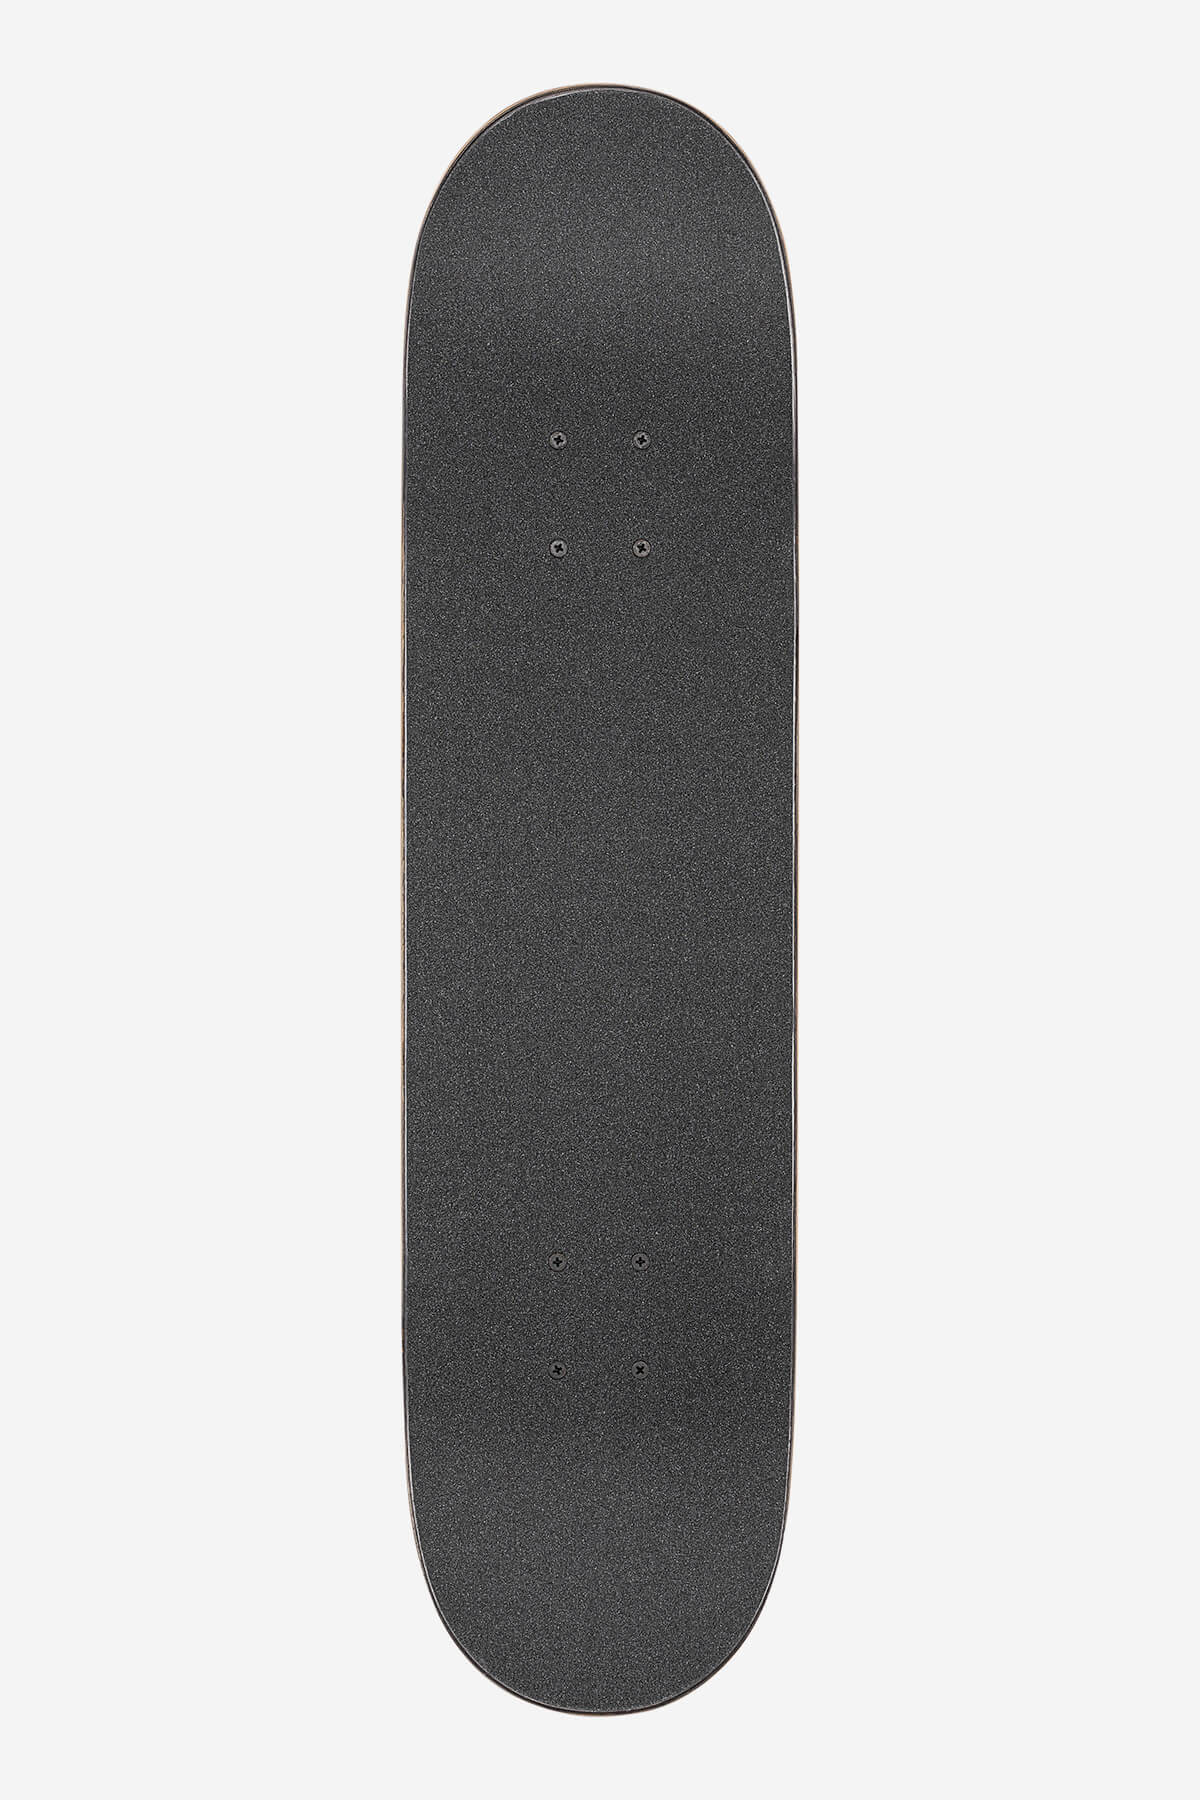 Globe - G1 Ablaze - Black Dye - 8.0" Komplett Skateboard